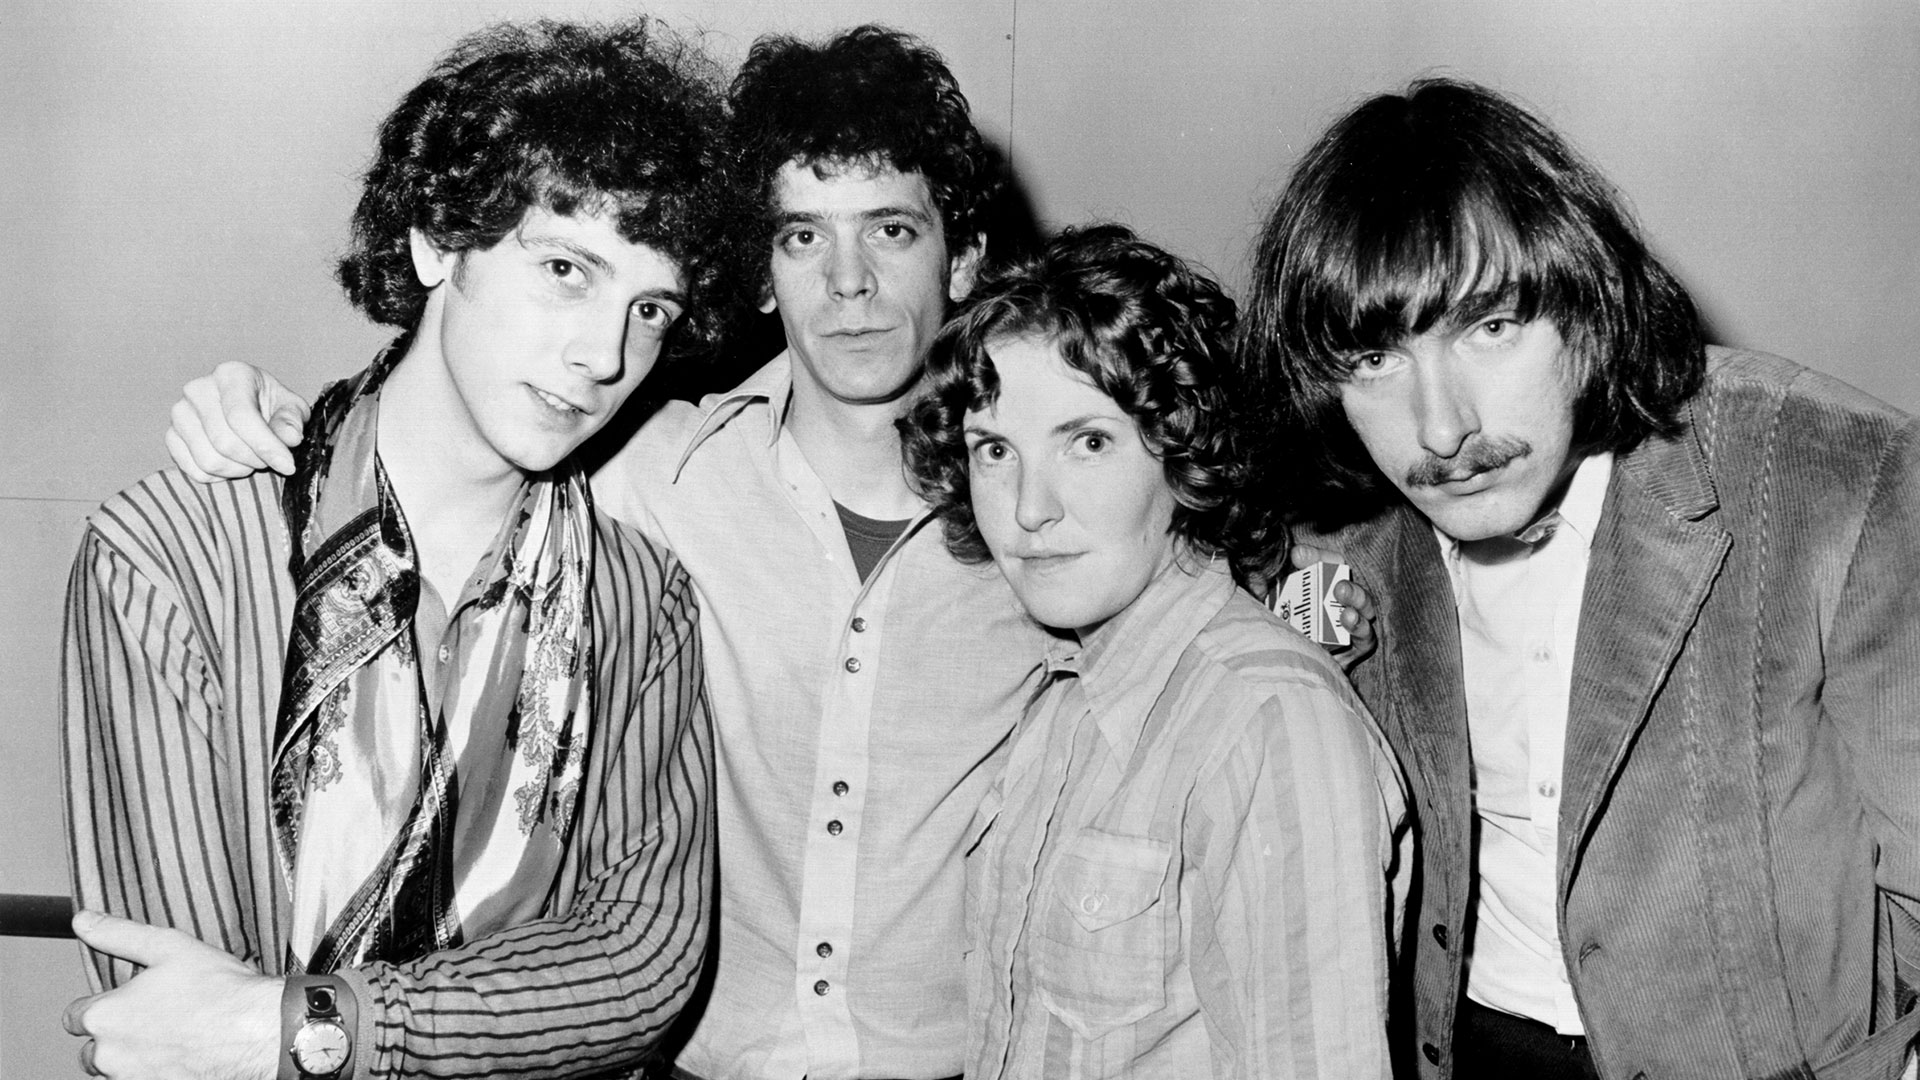 Doug Yule, Lou Reed, Maureen "Moe" Tucker y Sterling Morrison. Velvet Underground en1970 (Photo by Michael Ochs Archives/Getty Images)